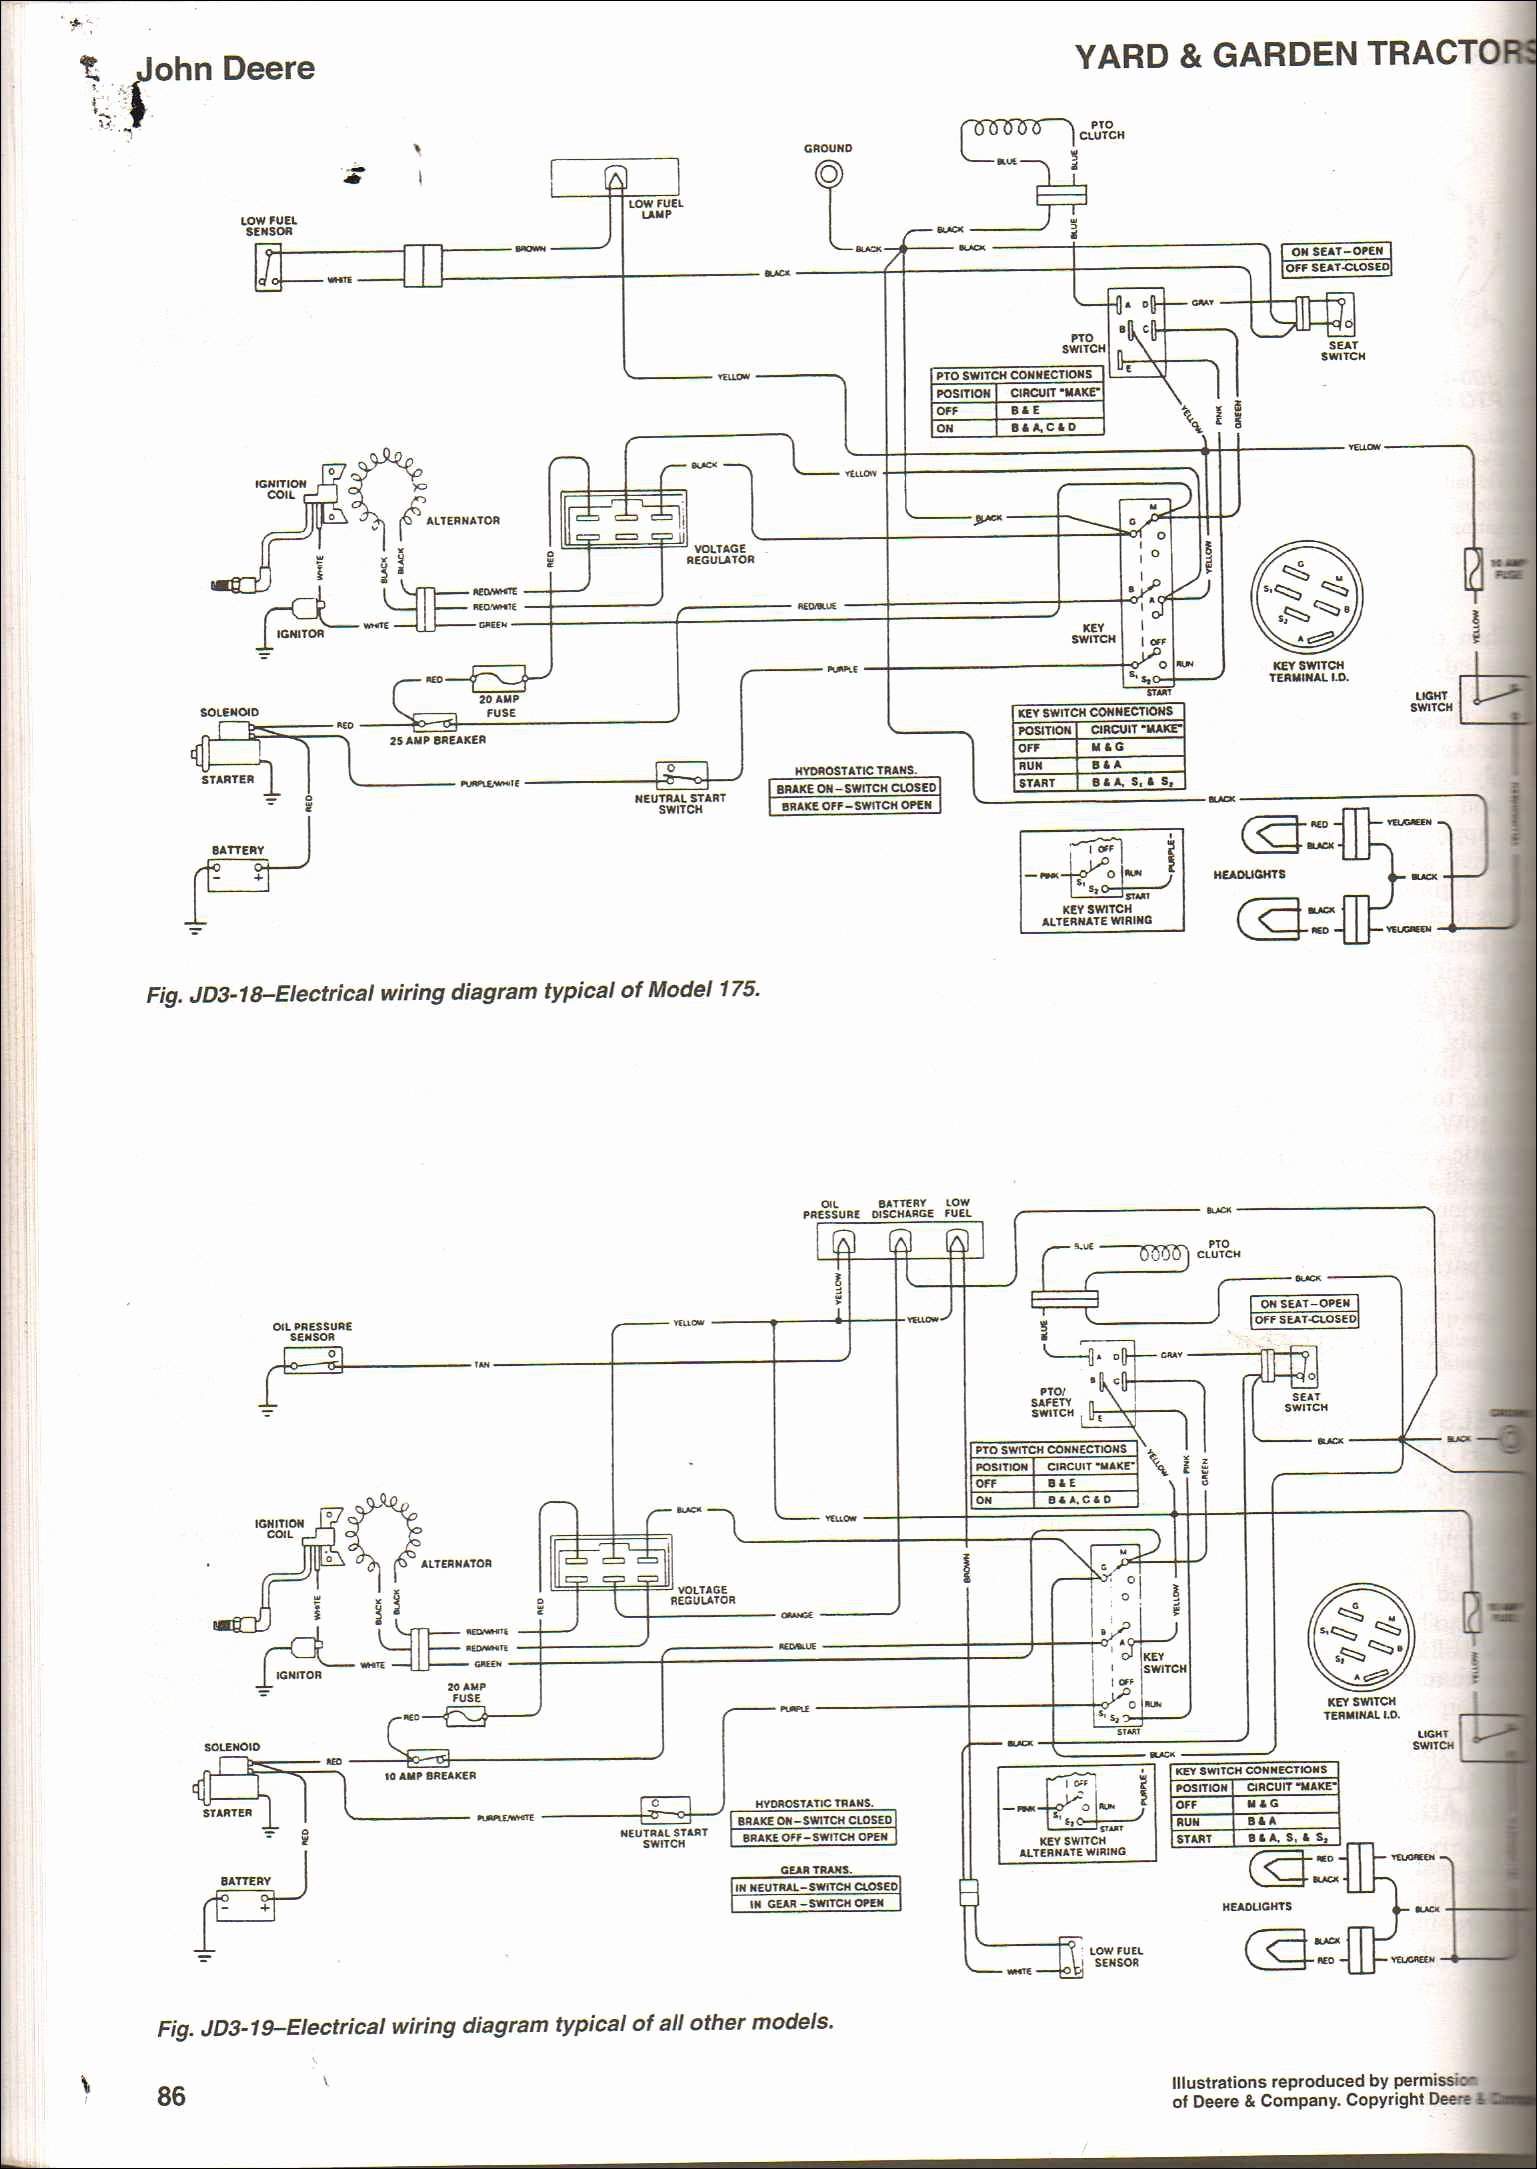 Wiring Diagram PDF: 1445 John Deere Fuse Box